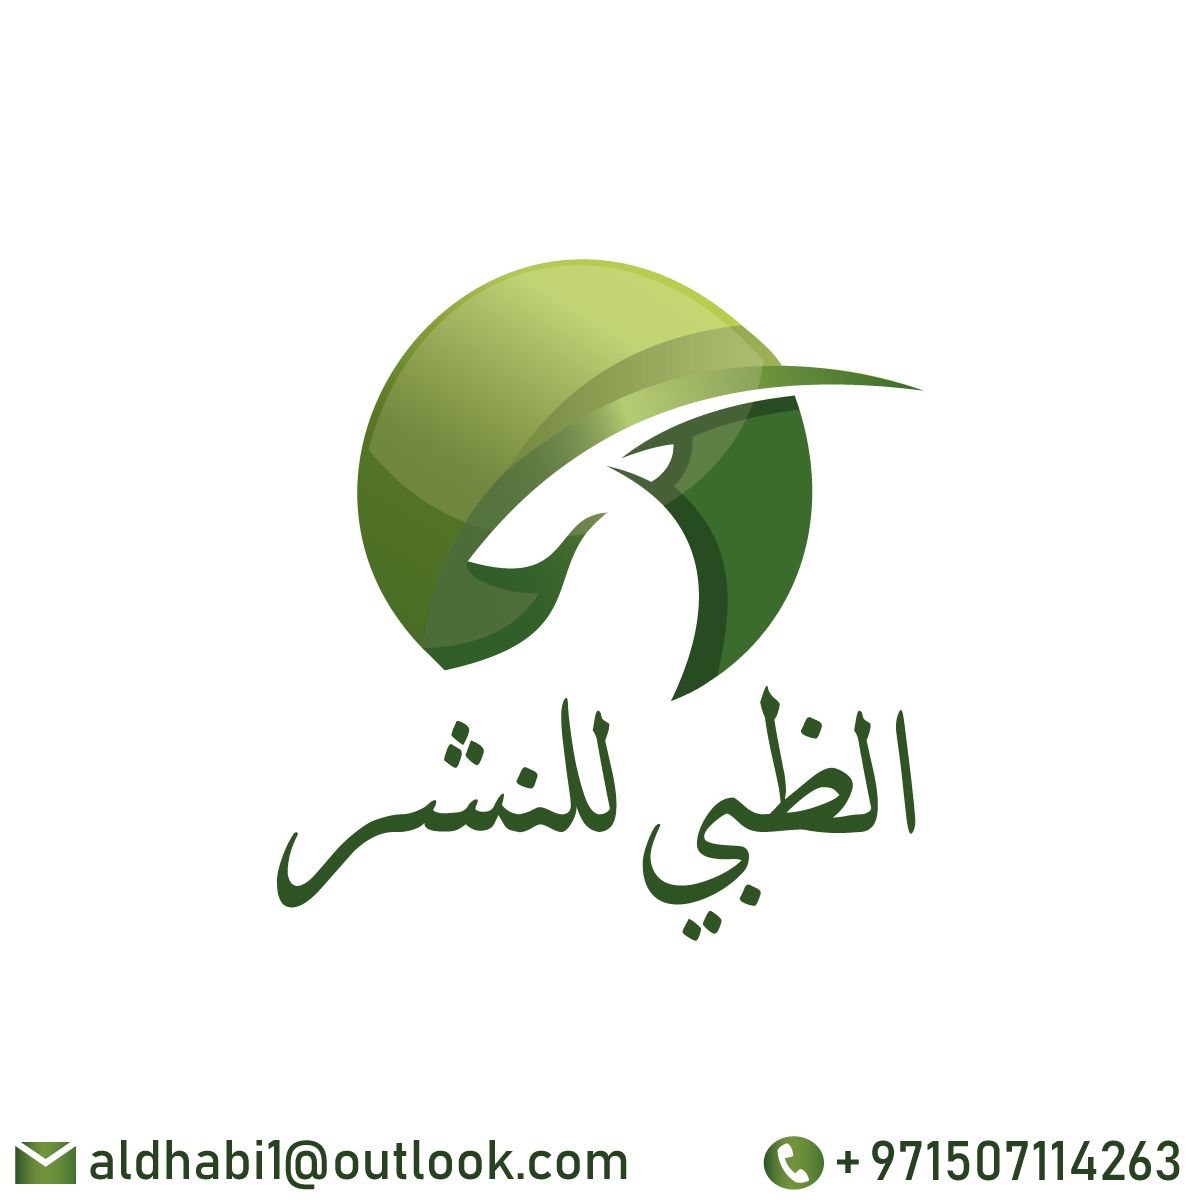 AL THABI PUBLISHING AND DISTRIBUTION